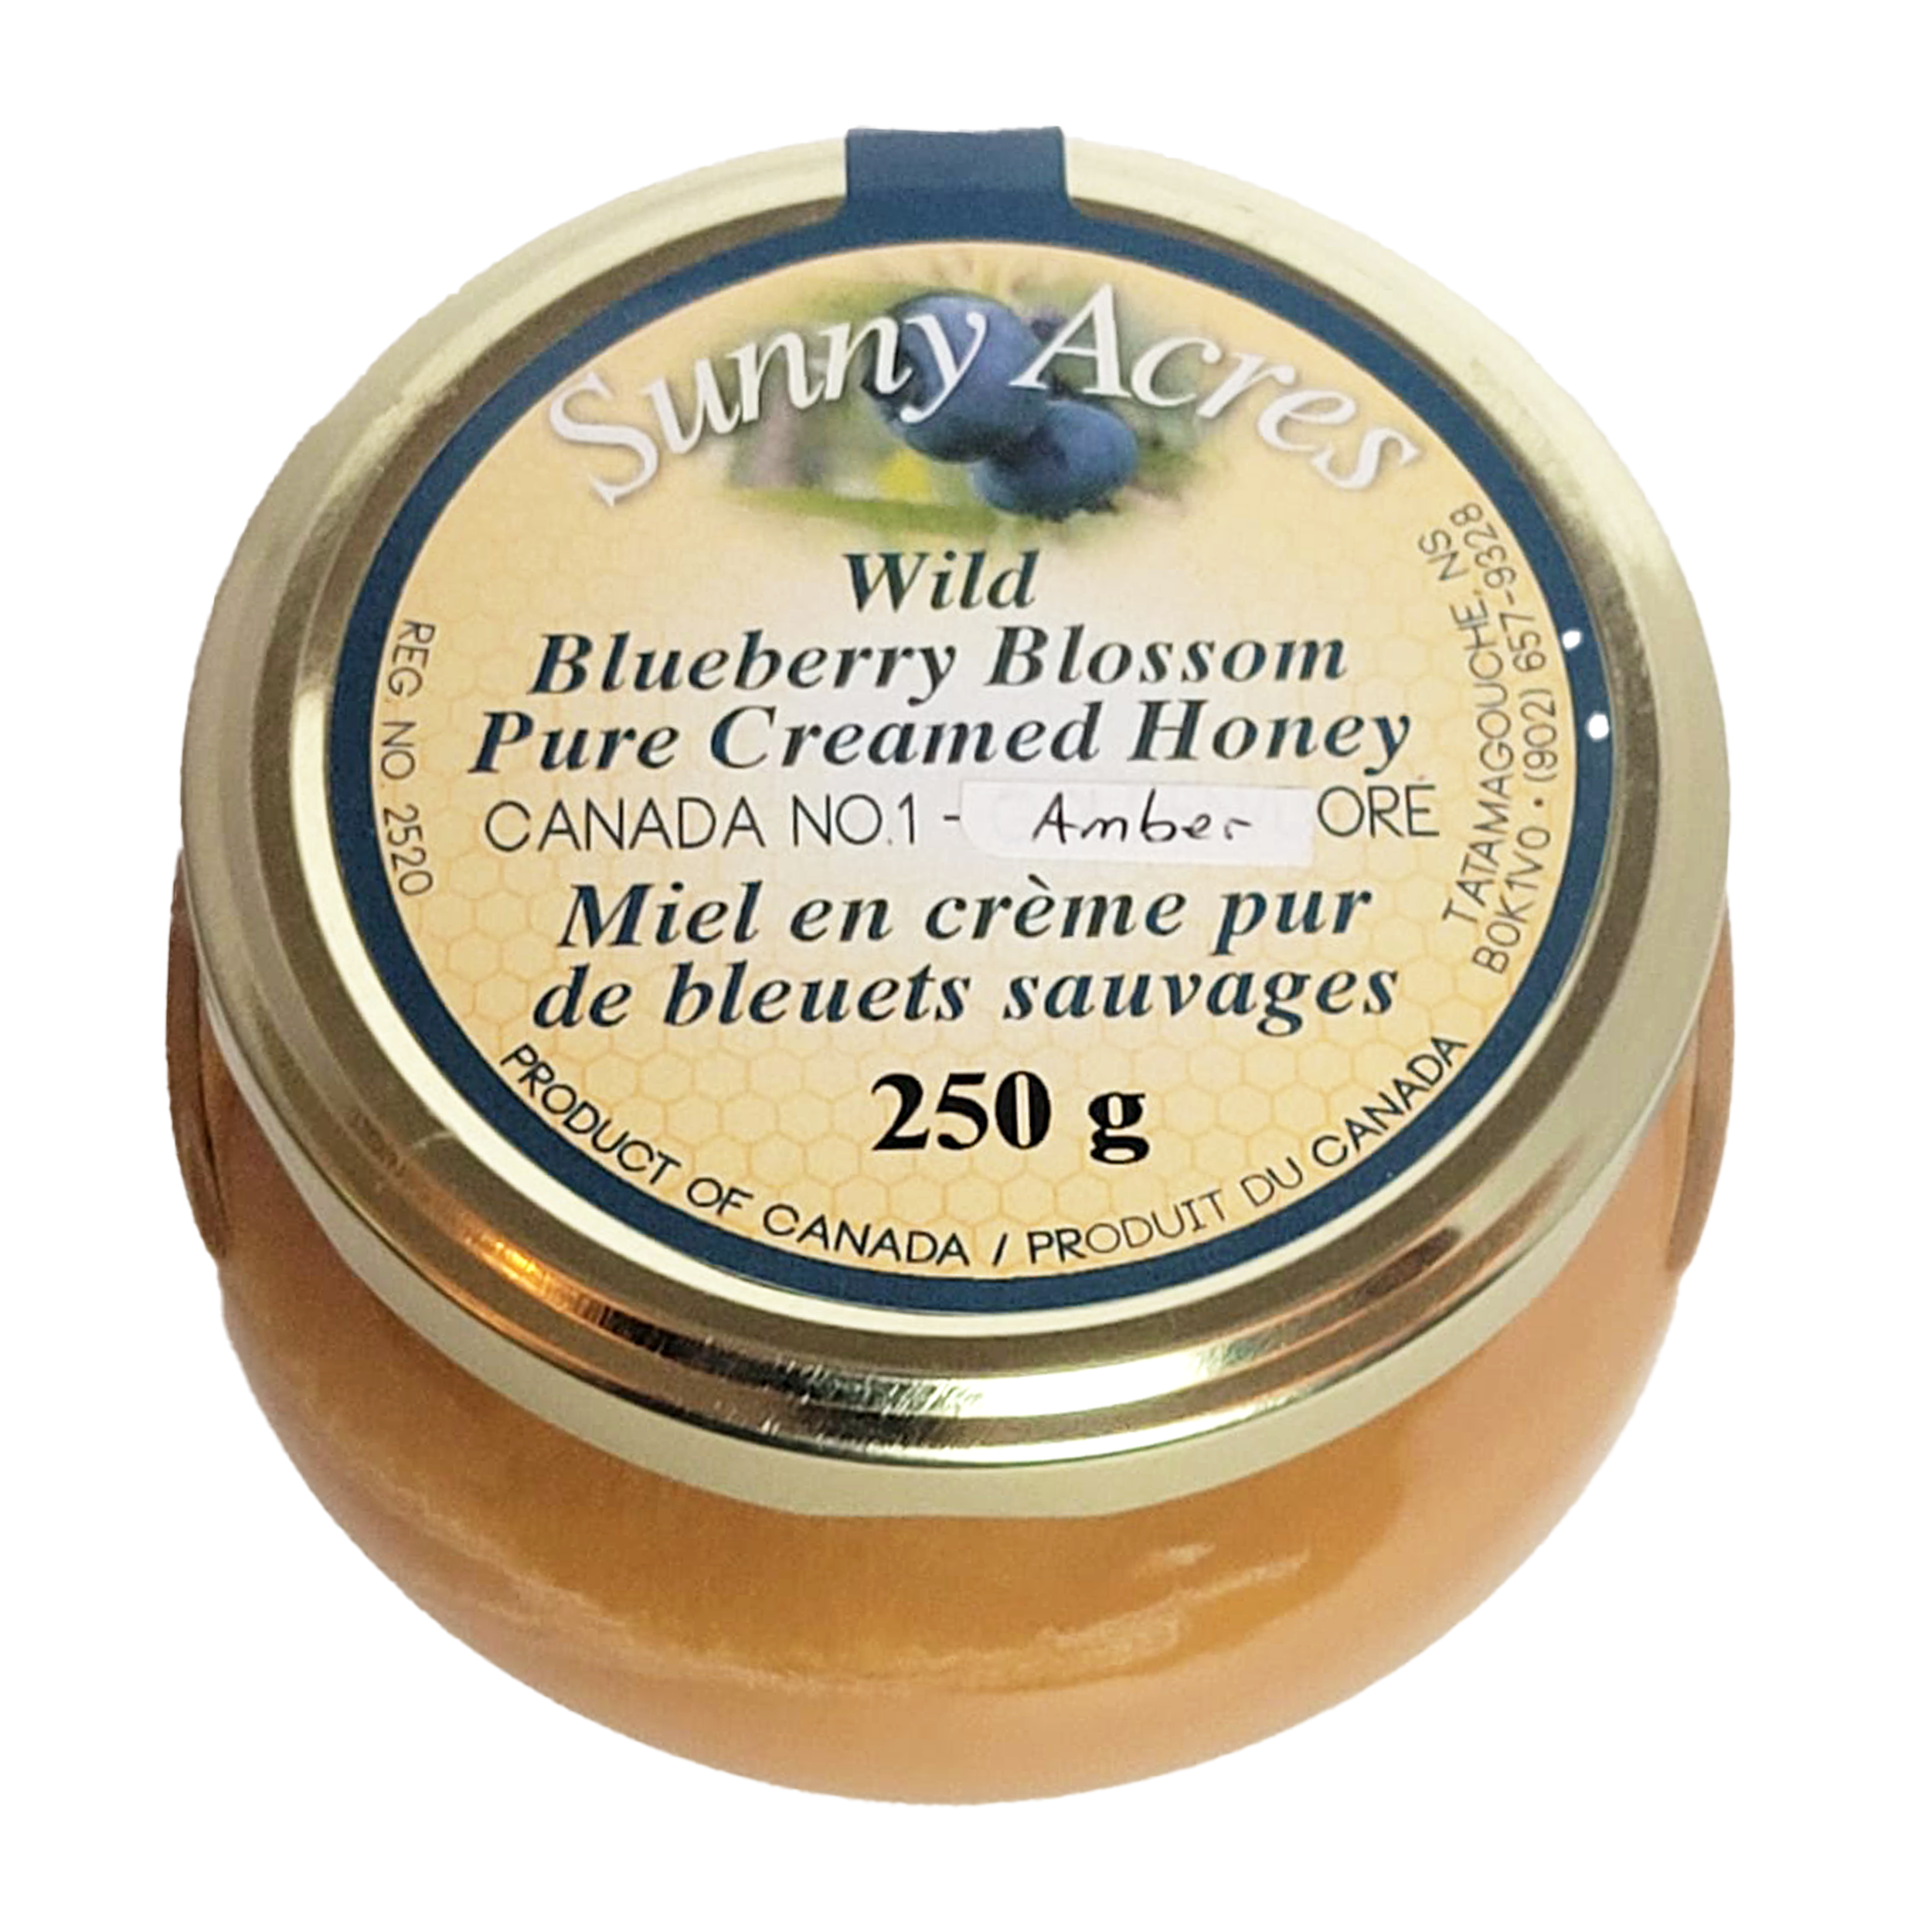 small blueberry blossom honey jars. creamed pure honey